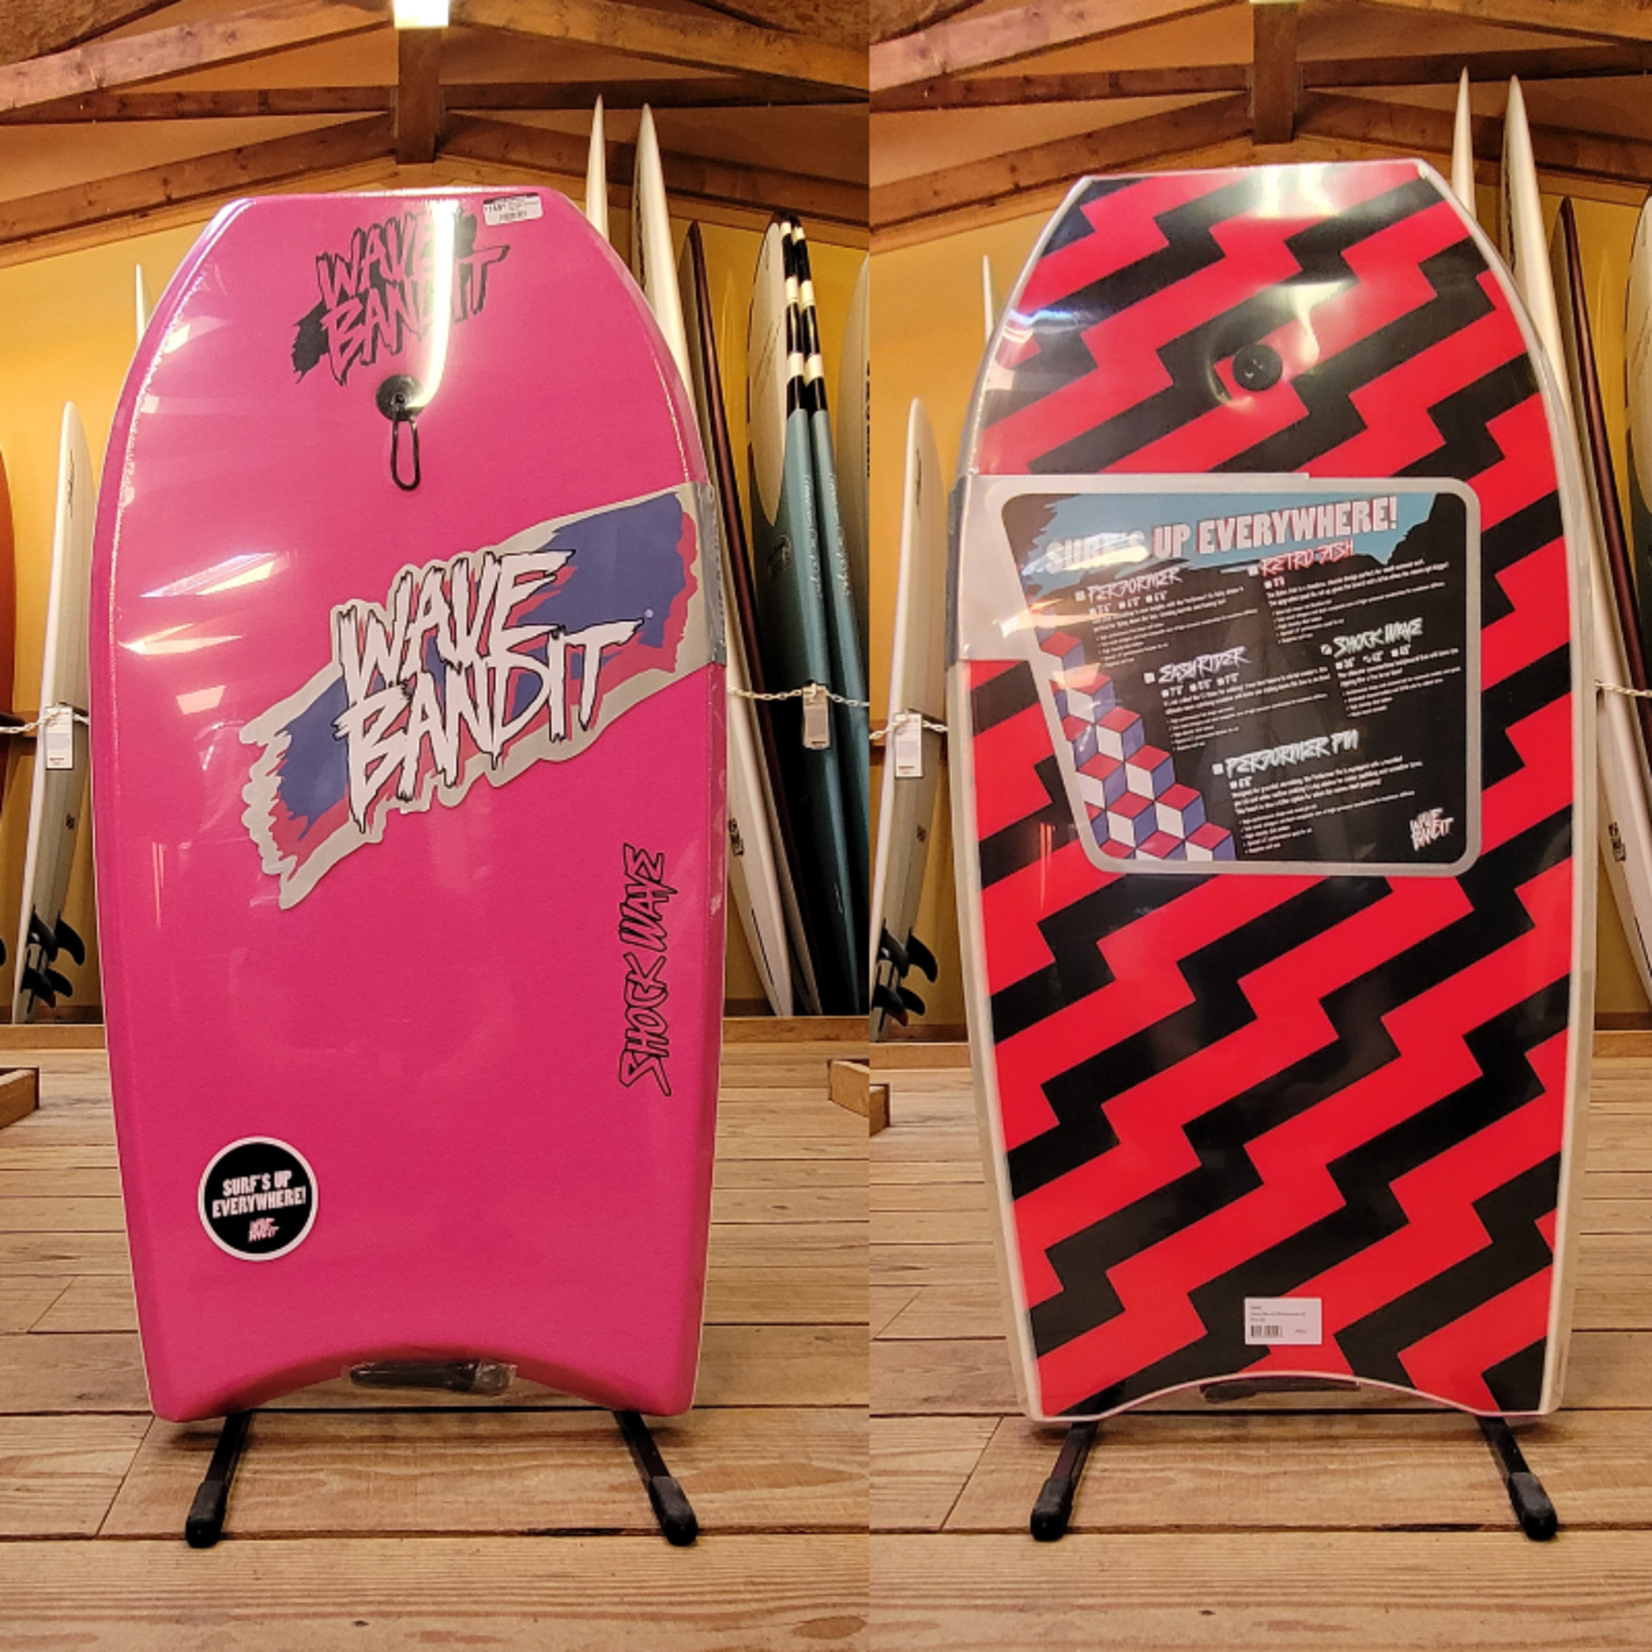 Catch Surf Wave Bandit Shockwave Bodyboard